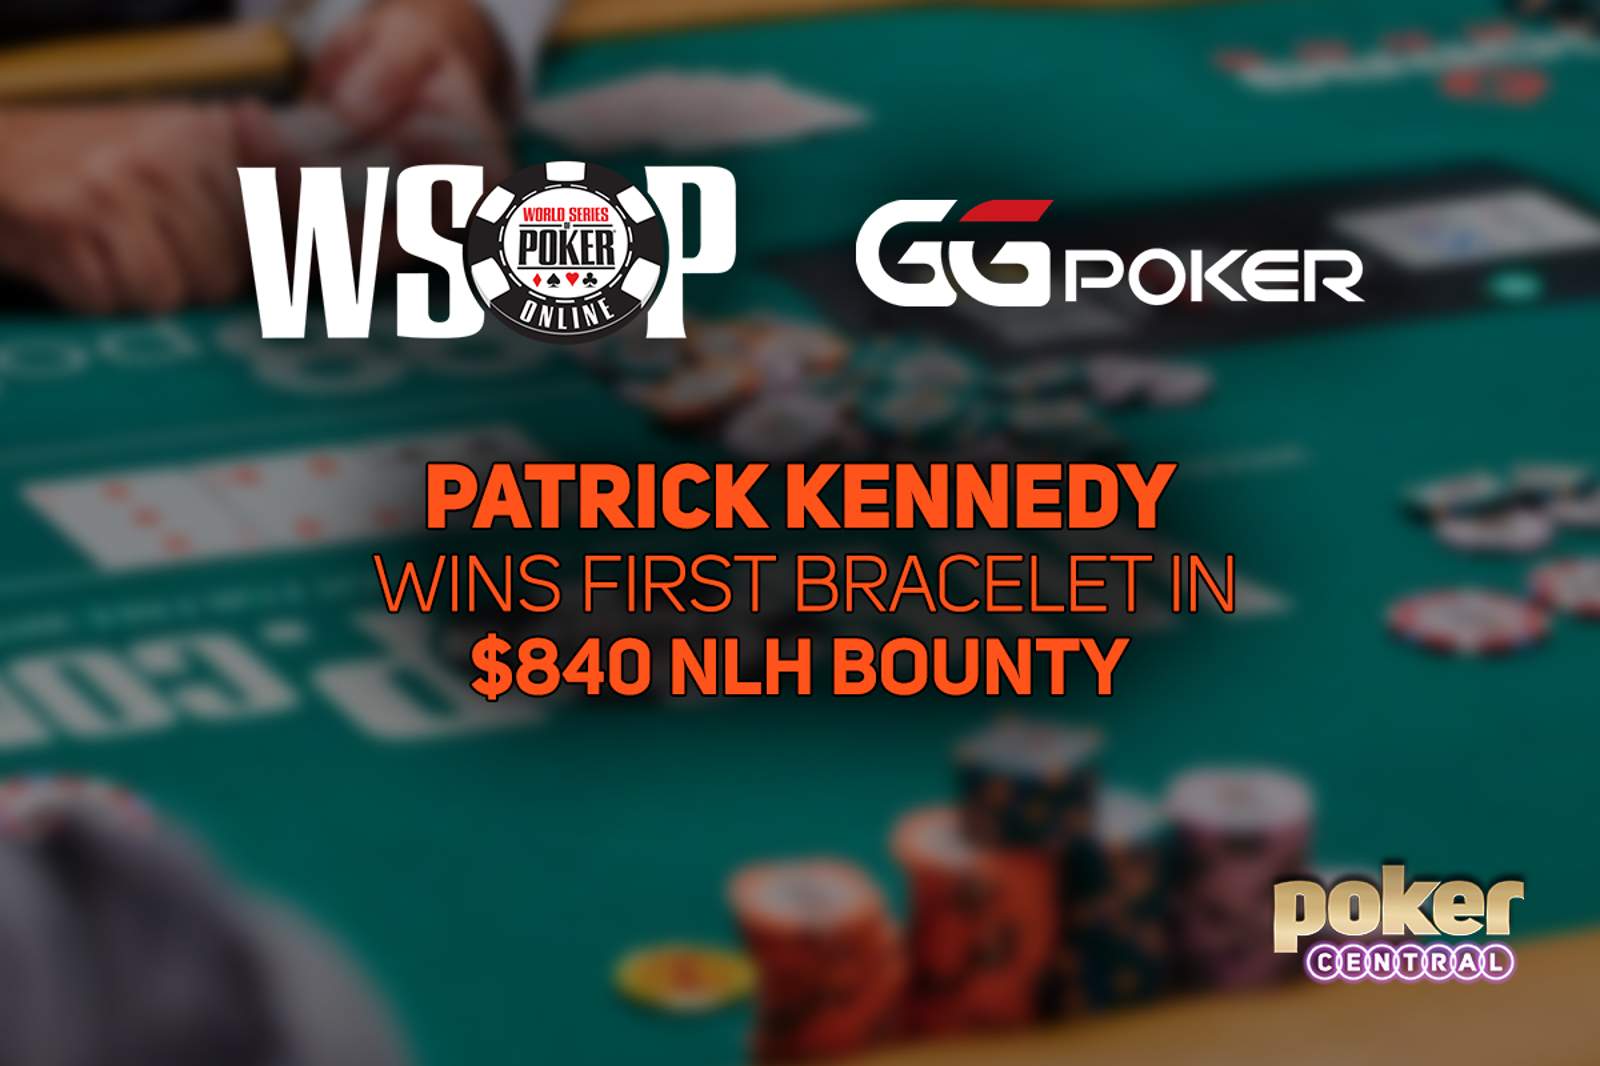 Patrick Kennedy Wins First Bracelet in GGPoker WSOP Online $840 Bounty No-Limit Hold'em for $245,448